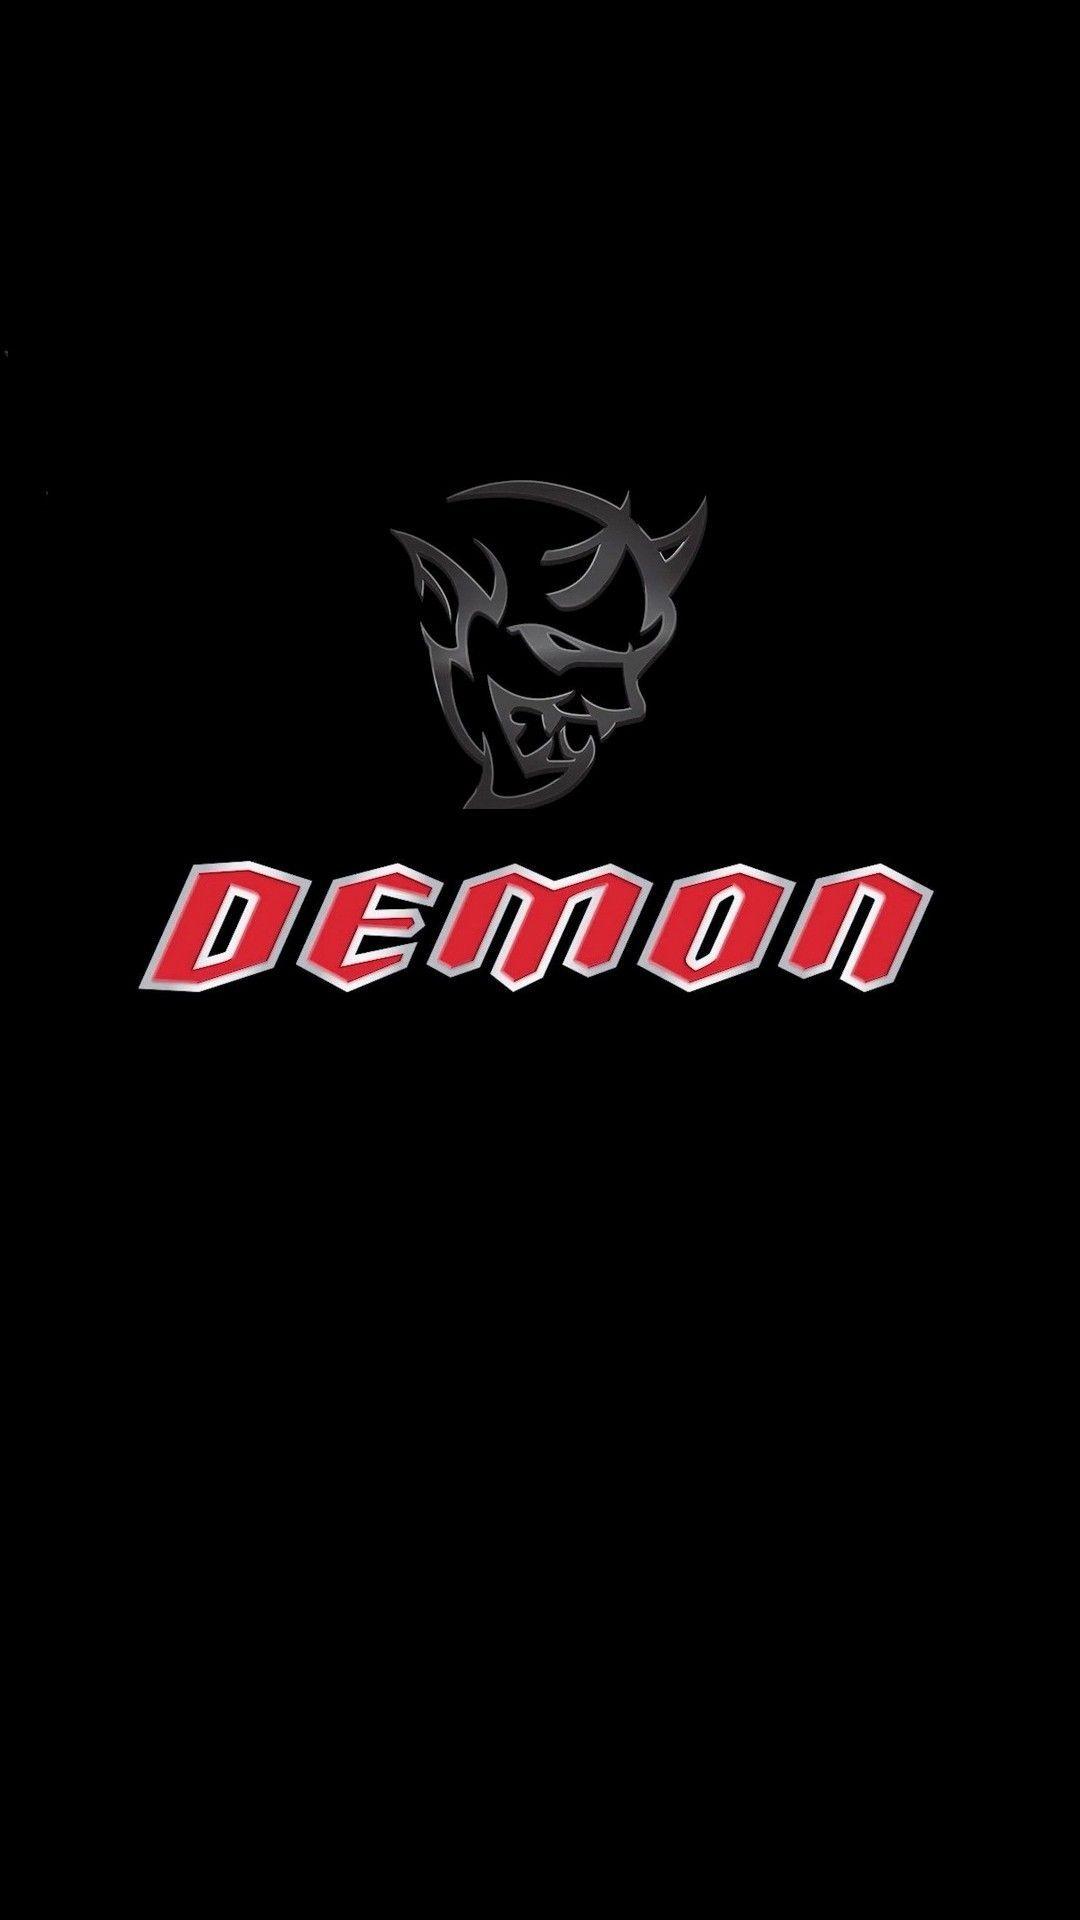 Demon Logo - Dodge Demon Logo iPhone Wallpaper | iPhoneWallpapers | Dodge, Cars ...